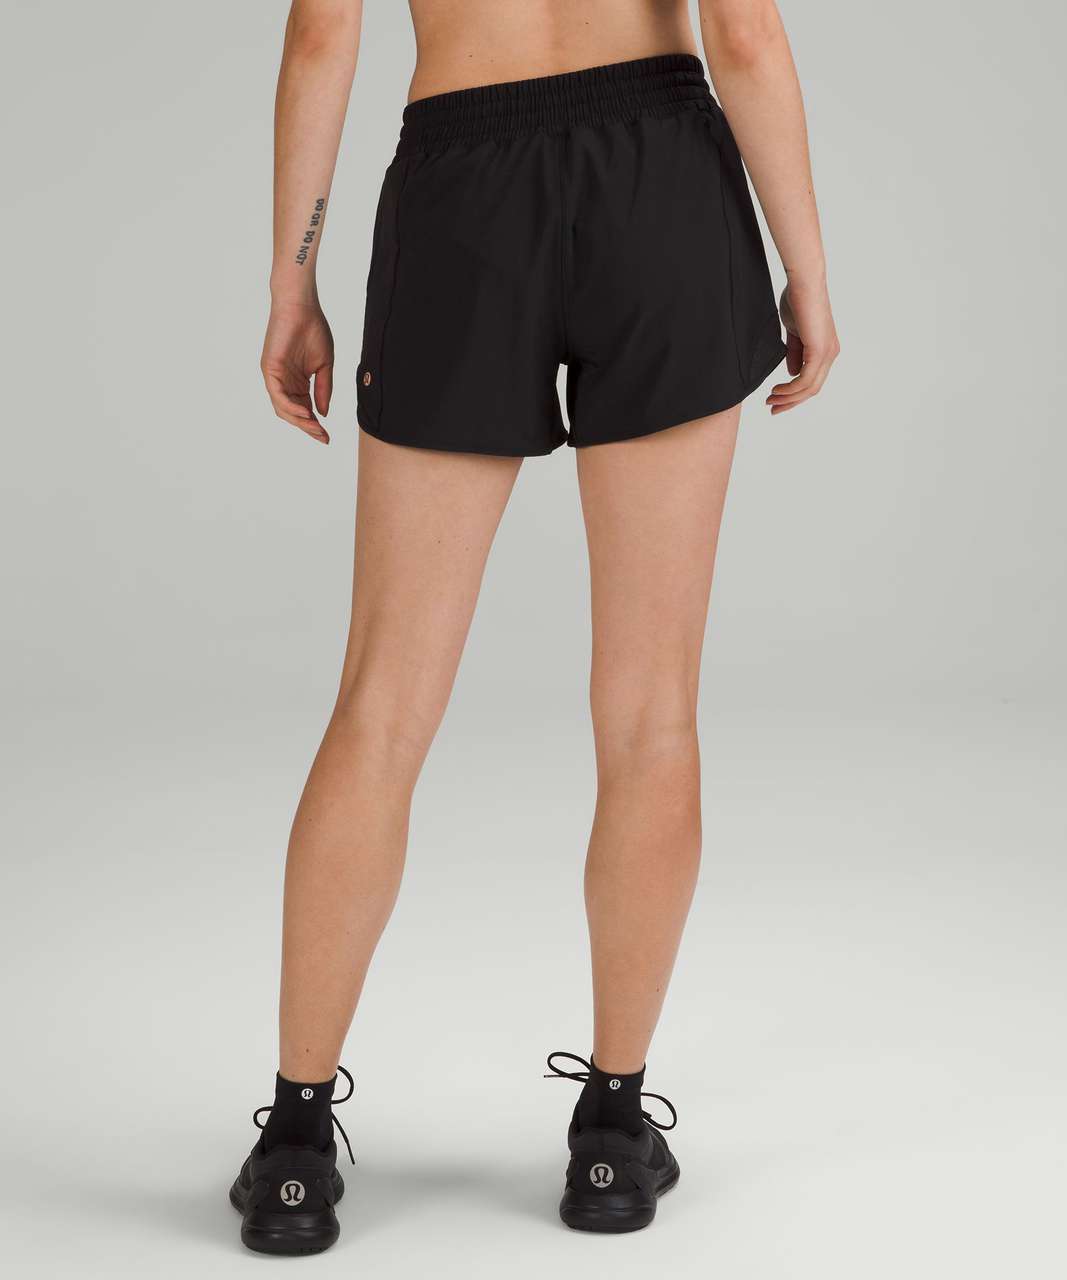 Lululemon Hotty Hot Shorts Low Rise Camo Deep Coal Black 2.5 Inseam SZ 10  Lined